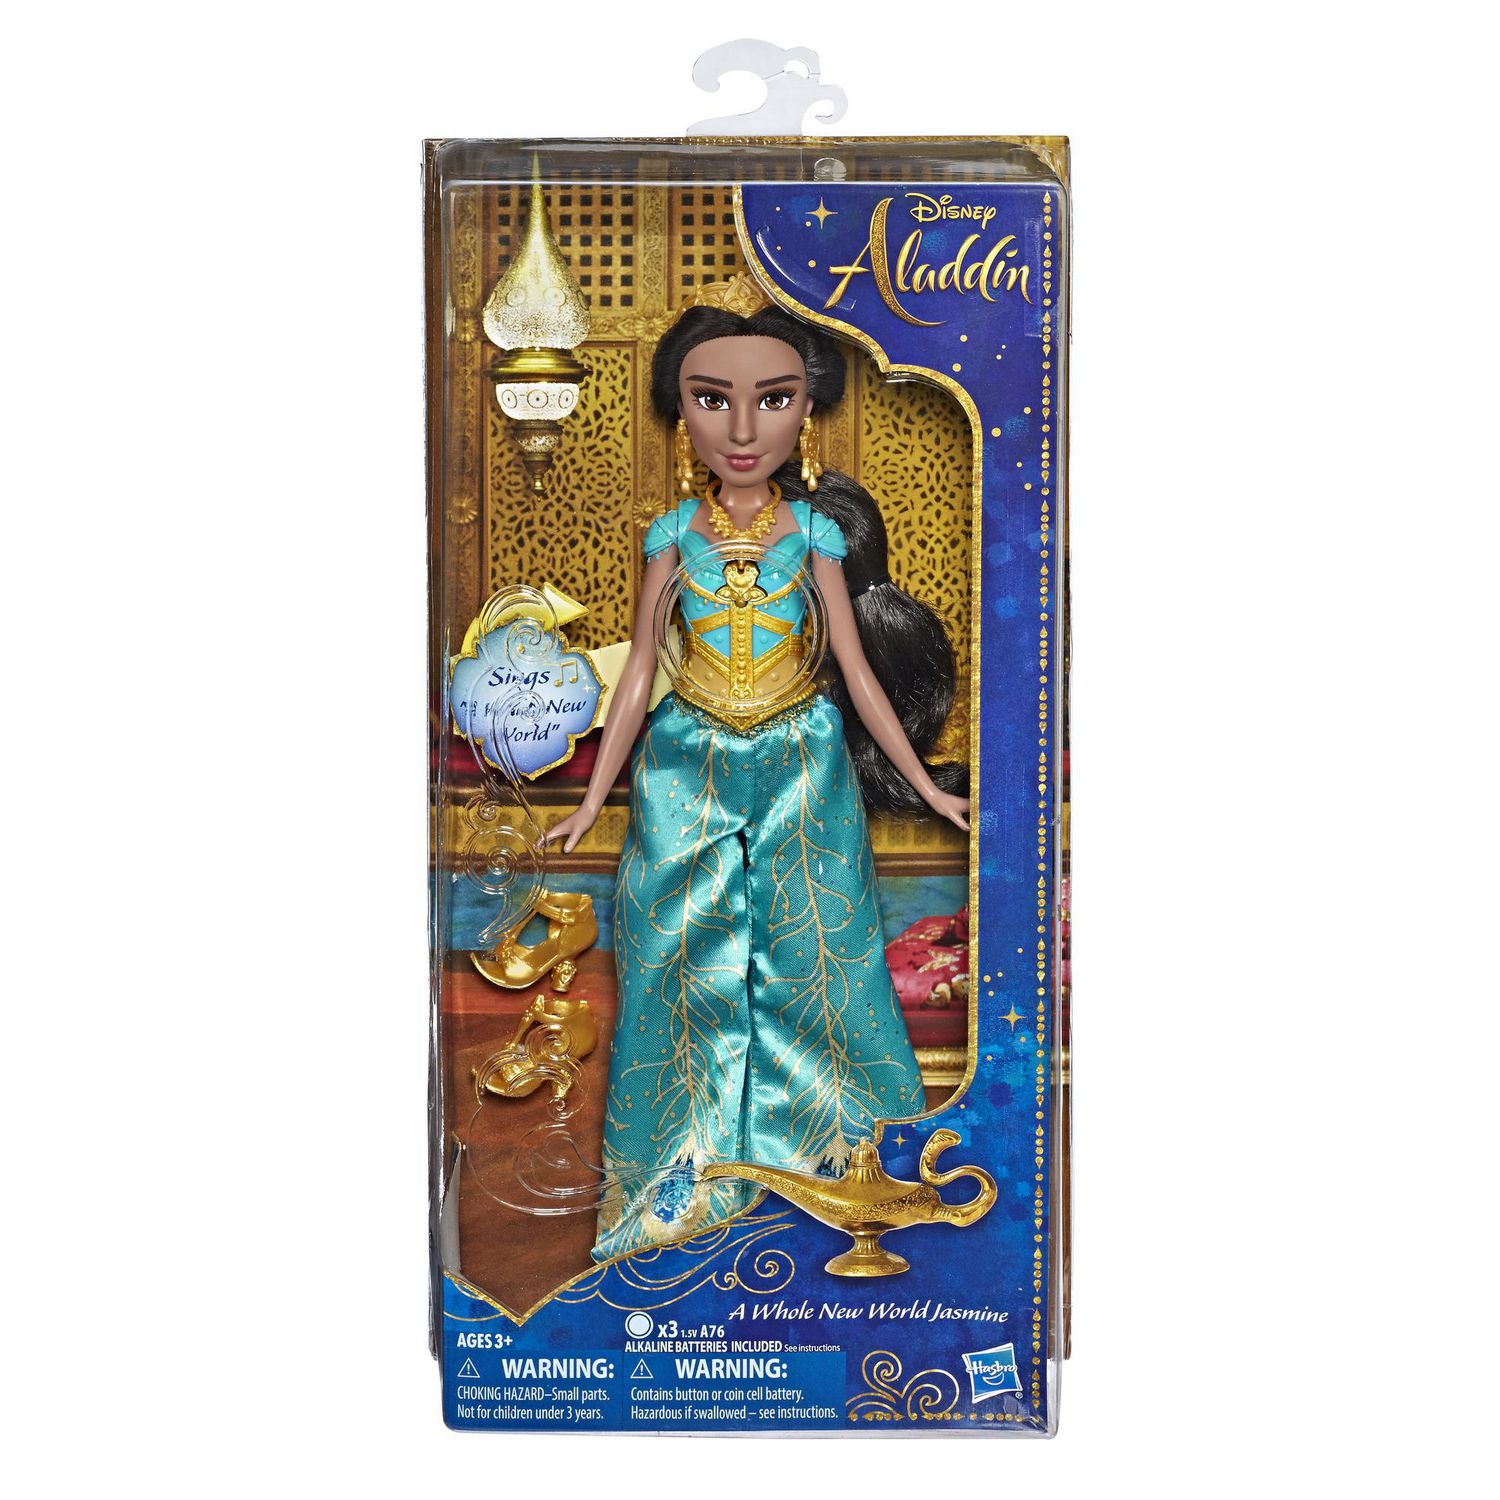 jasmine doll from aladdin